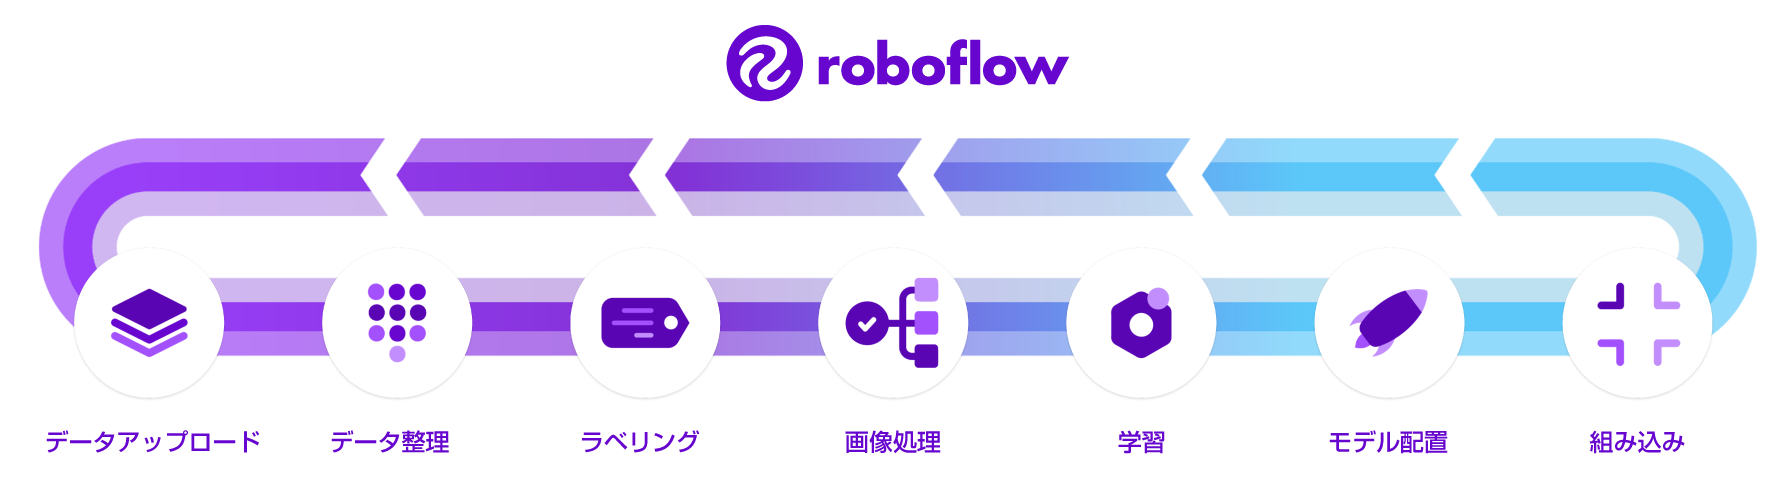 roboflow機械学習の流れ